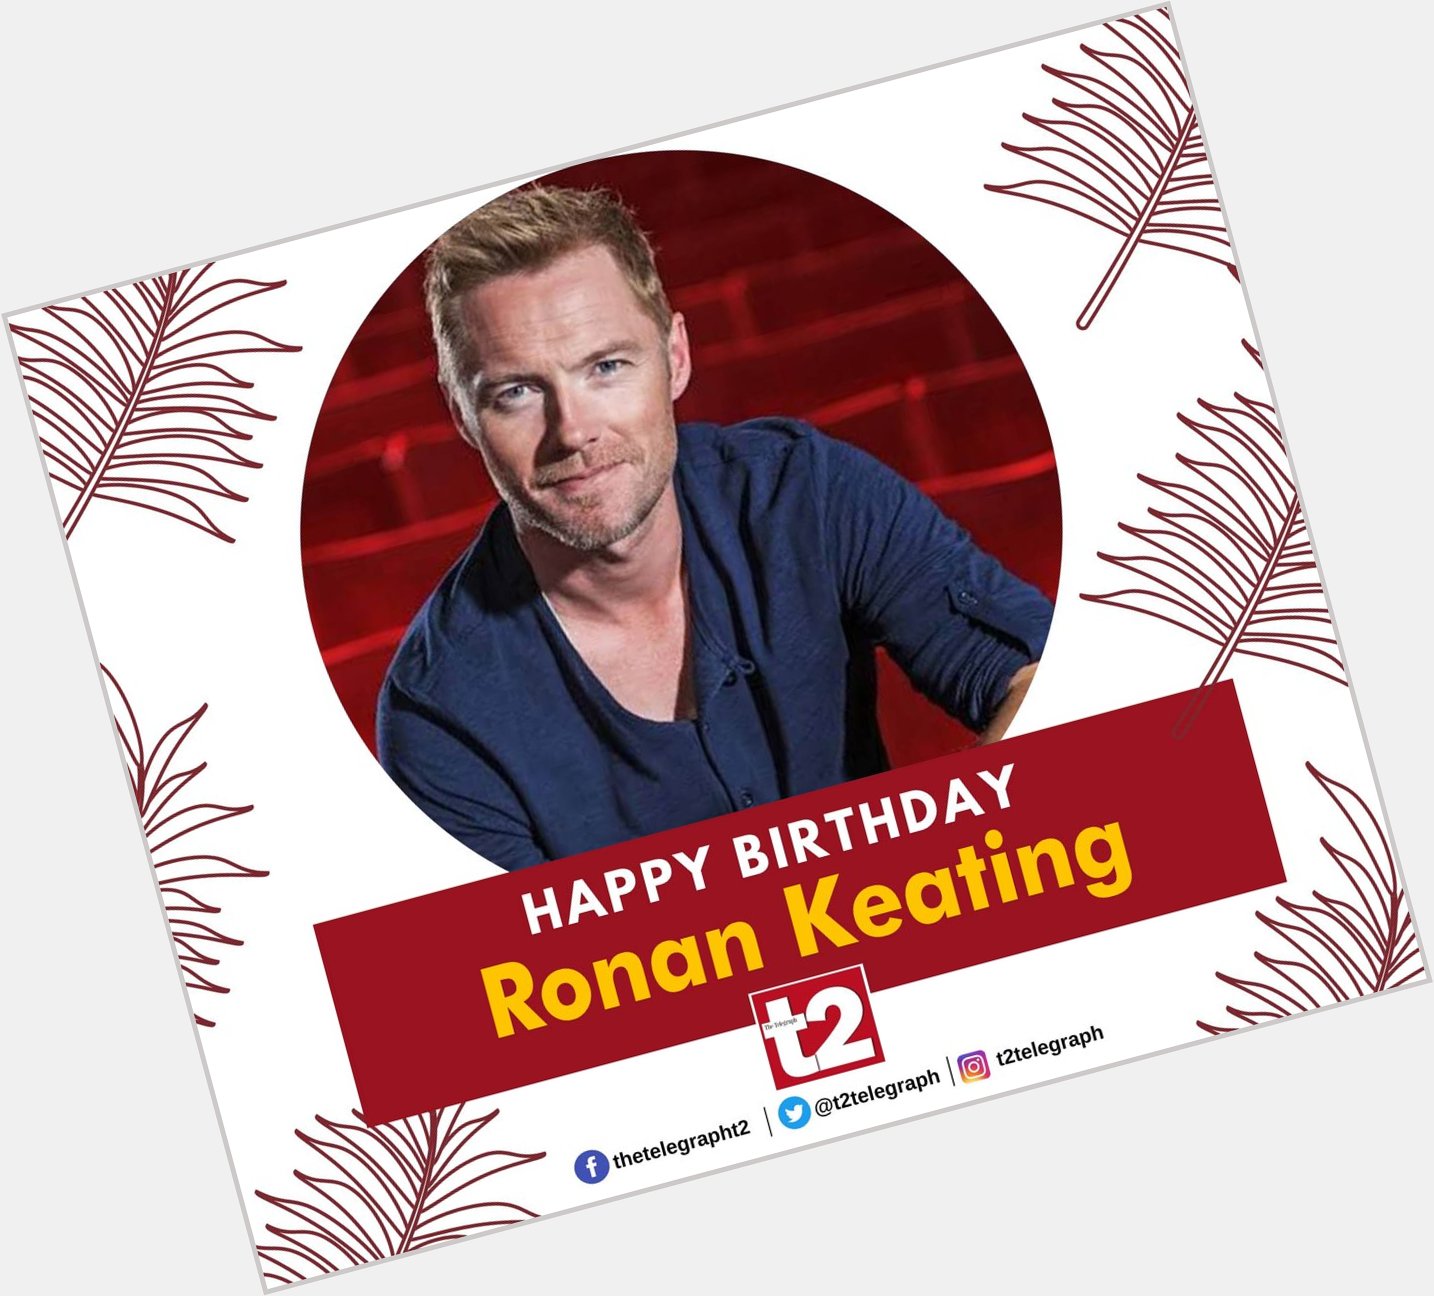 Happy birthday Ronan Keating, the man who always delivers tasteful ballads. 